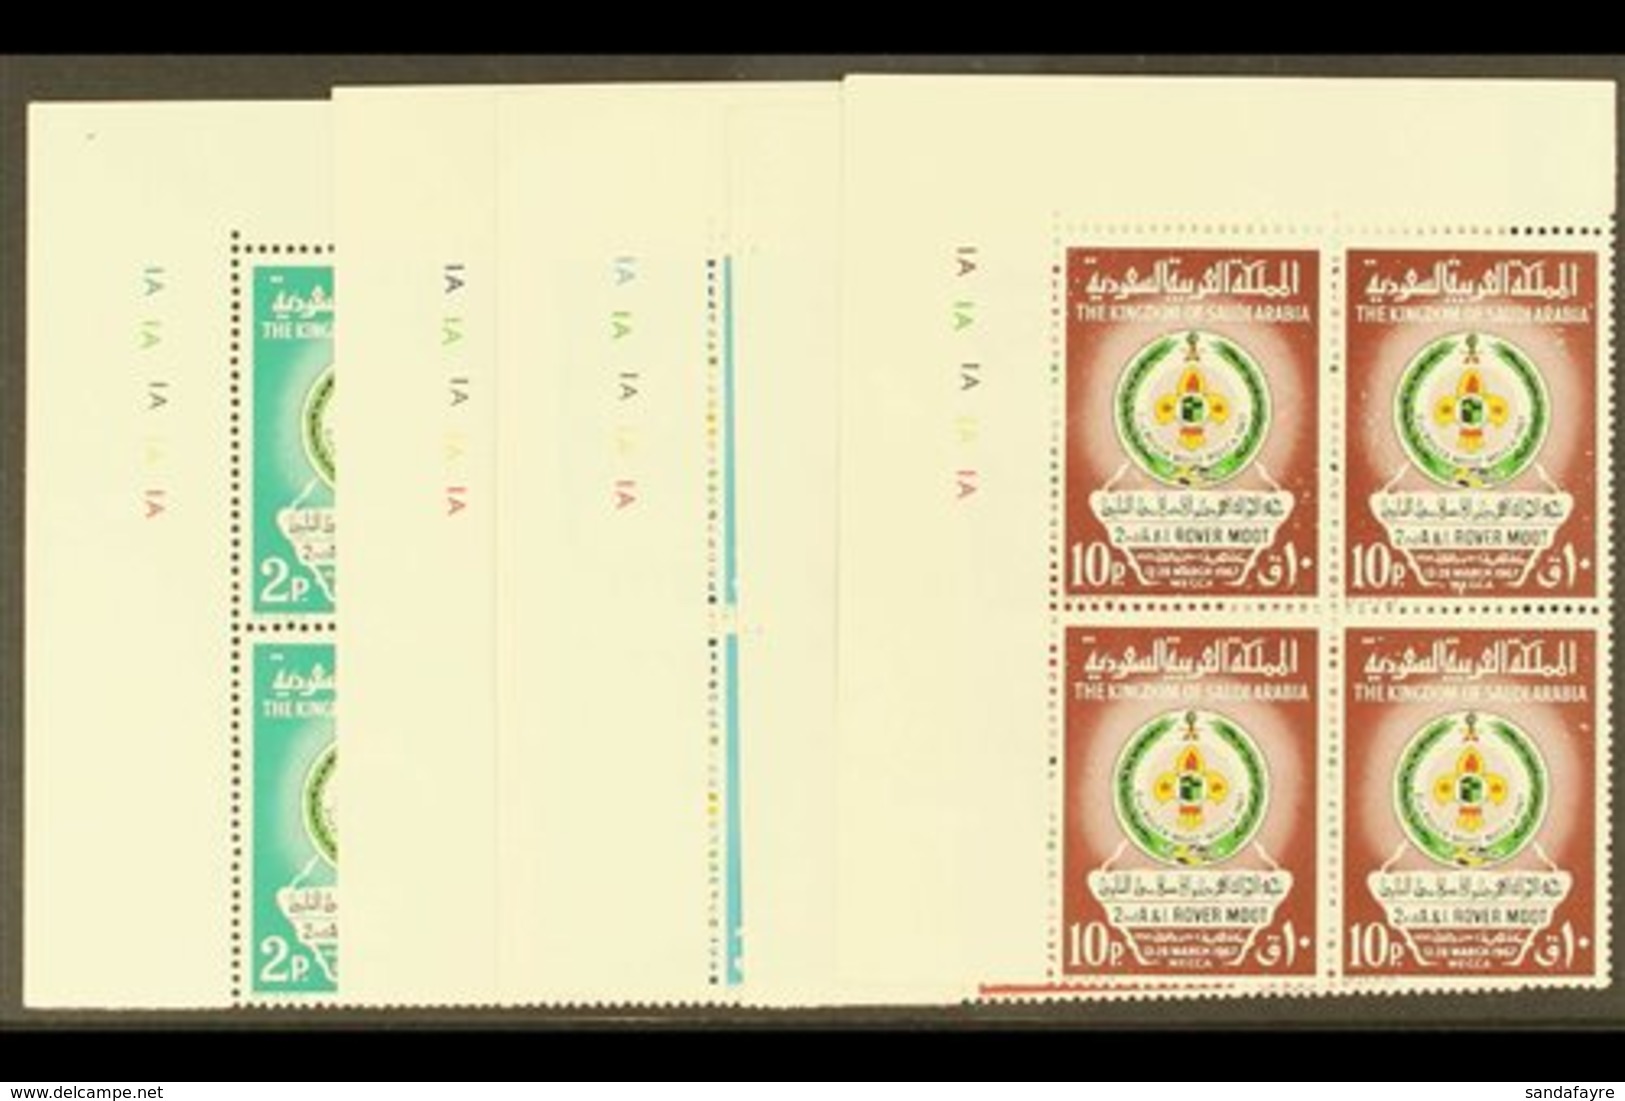 1967  World Meteorological Day Set Complete, SG 750/4, In Never Hinged Mint Corner Blocks Of 4. (20 Stamps) For More Ima - Saoedi-Arabië